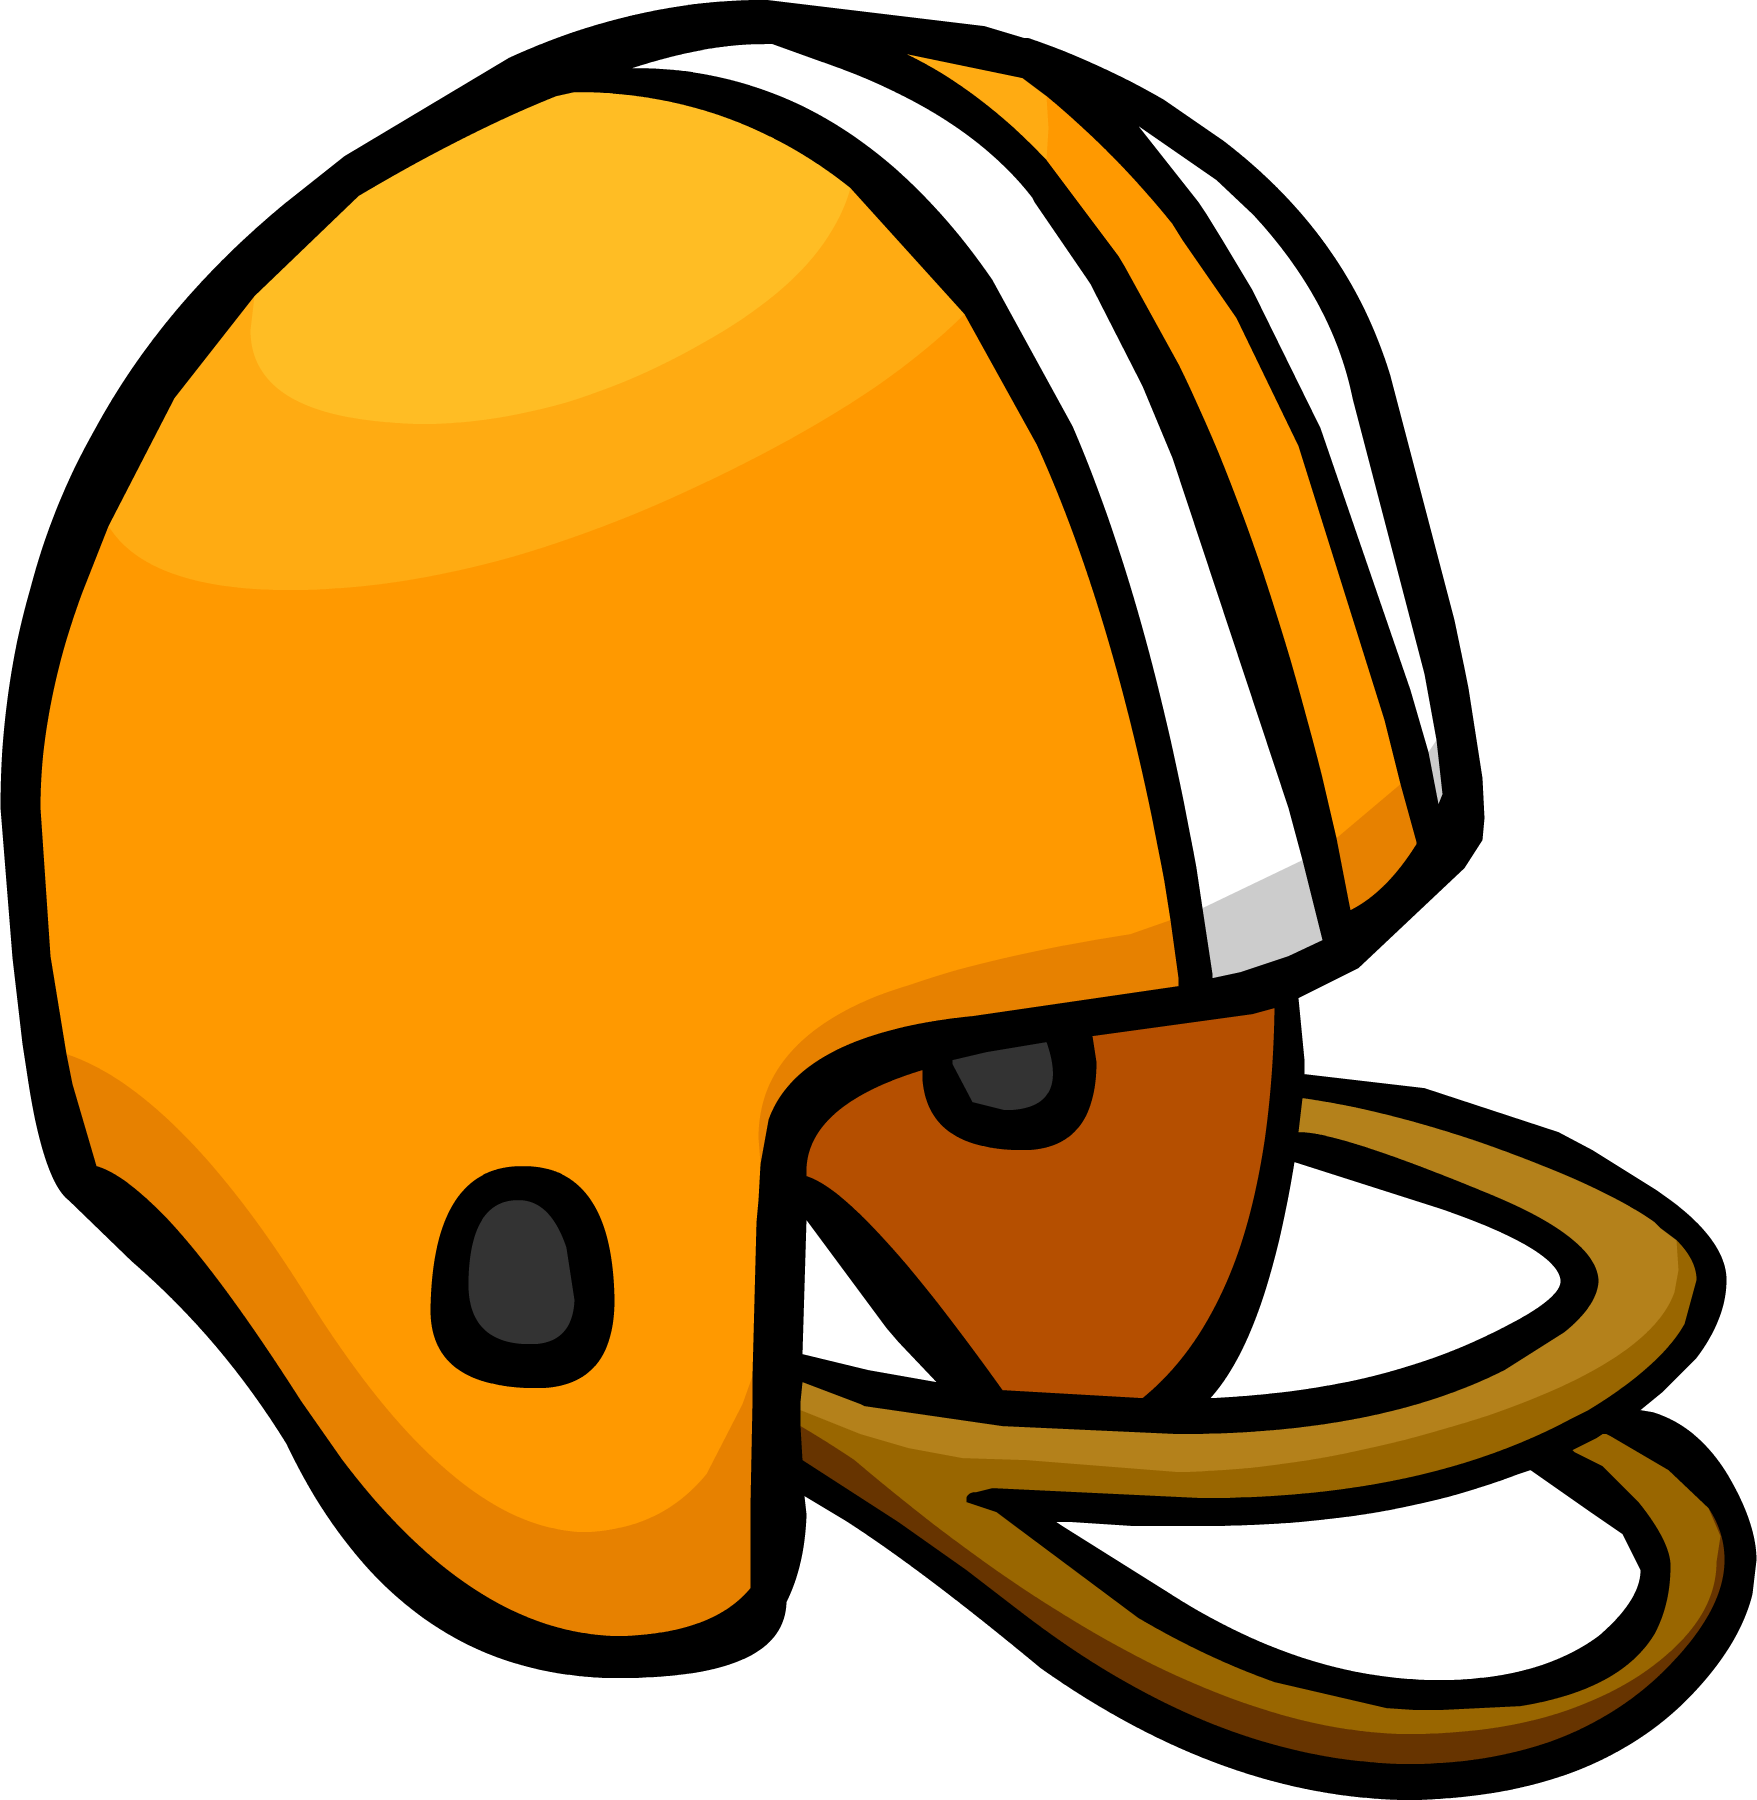 The Football Helmet is a head item in Club Penguin Rewritten. 